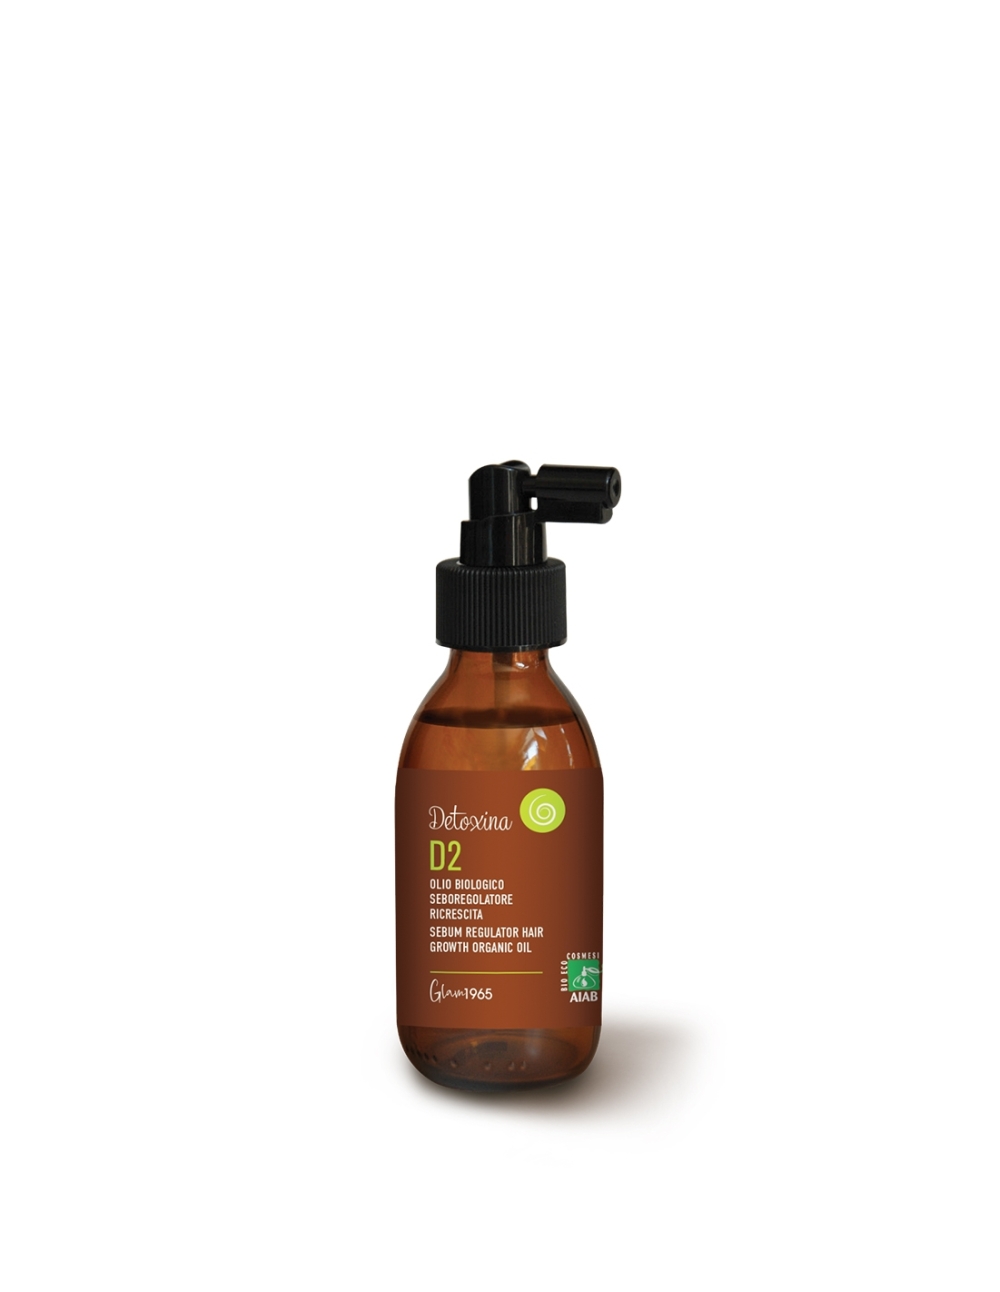 D2 | Sebum regulator hair growth organic oil